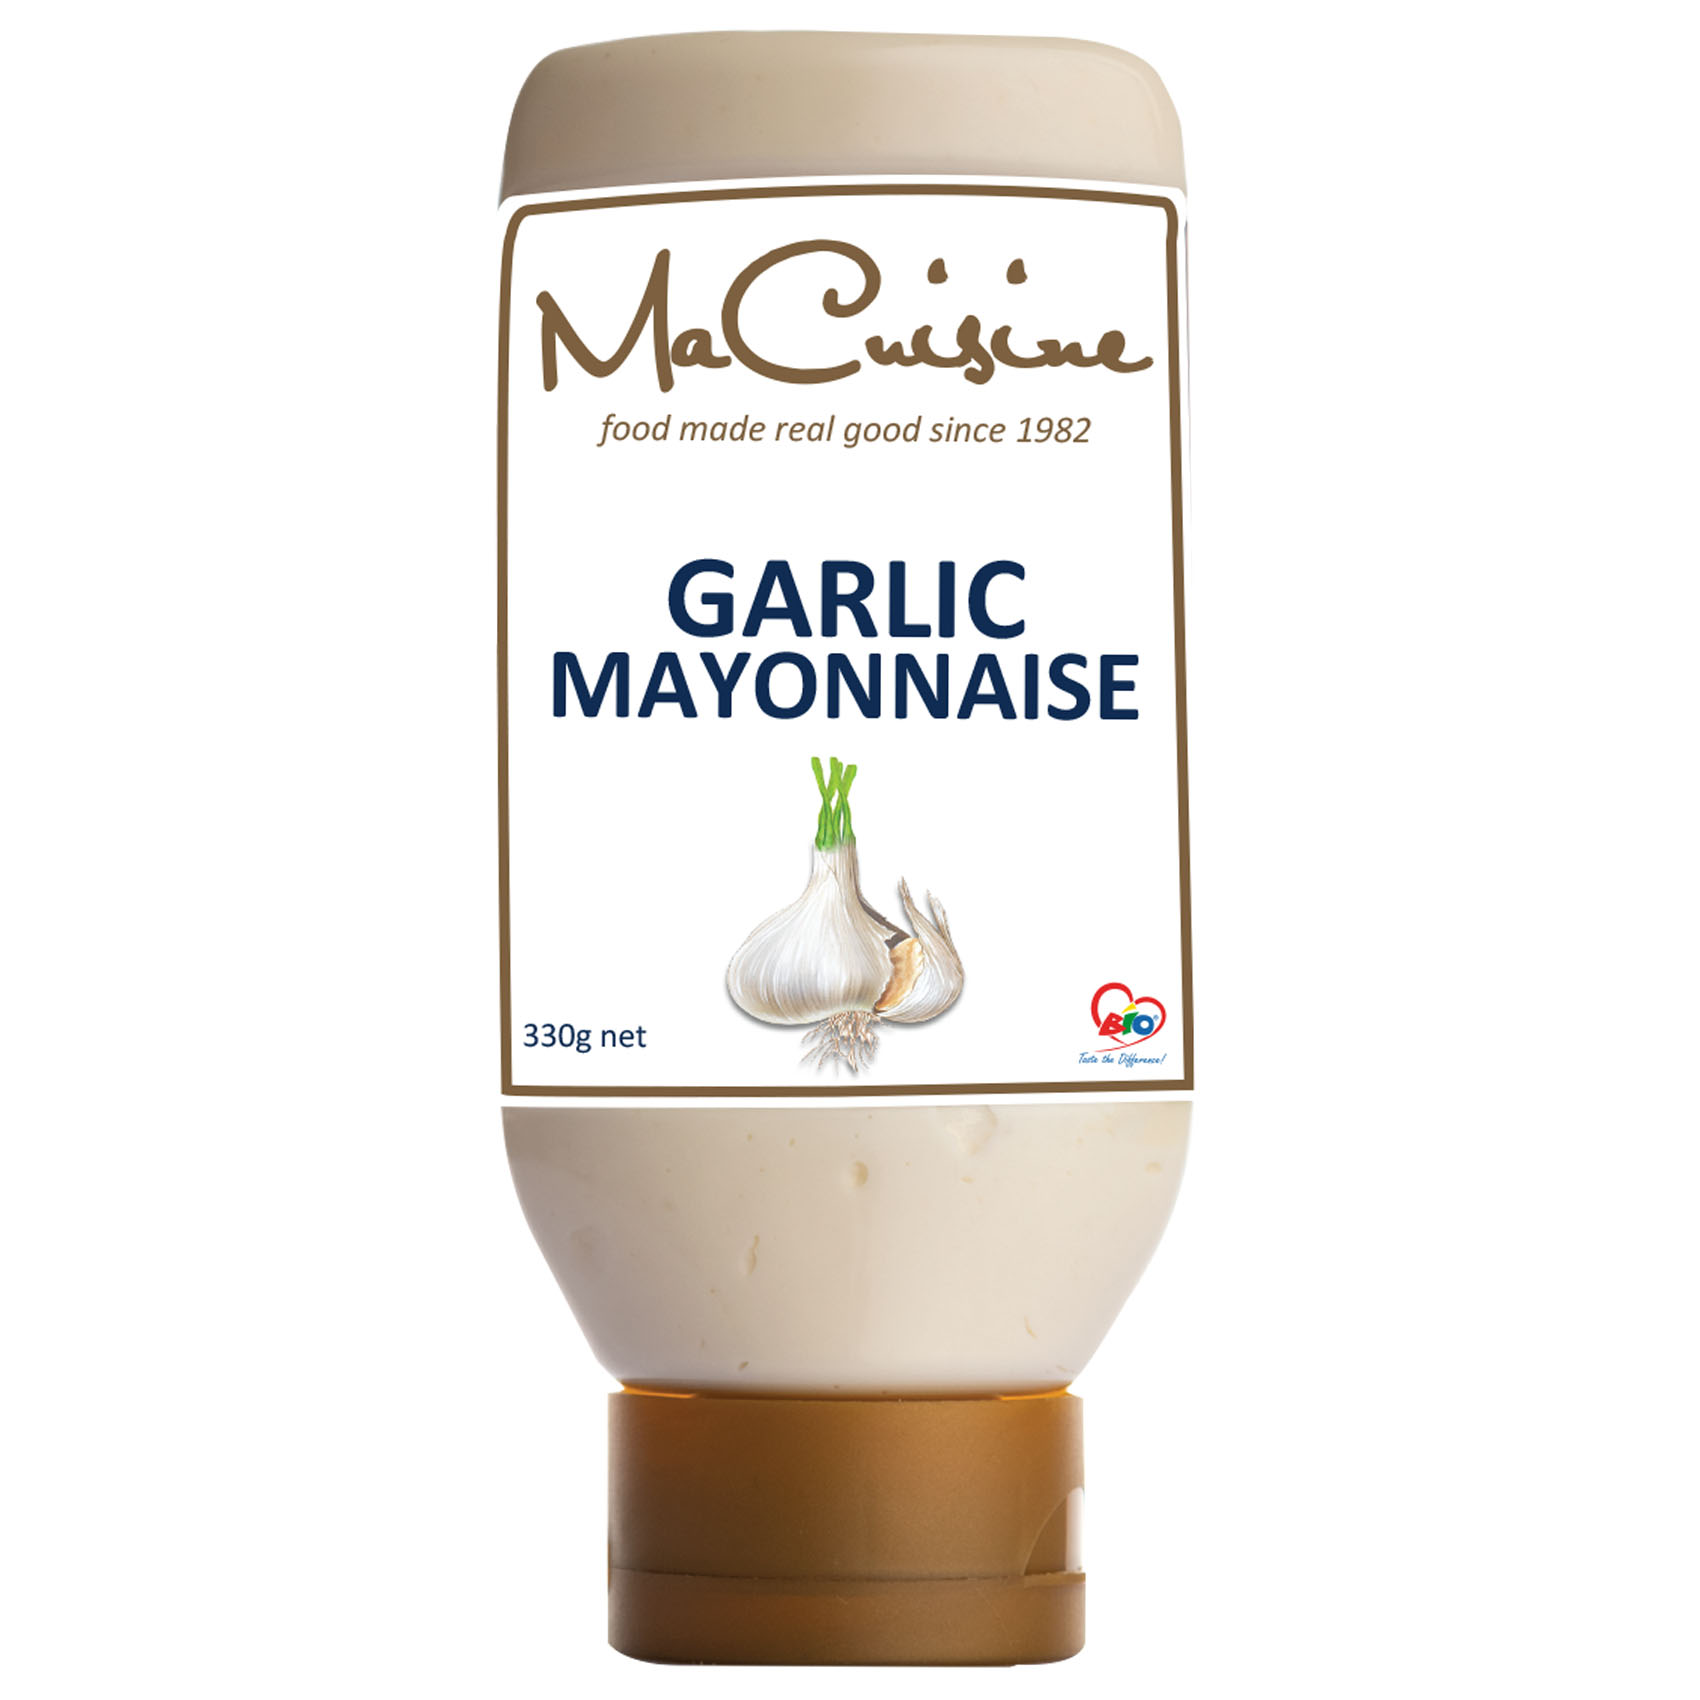 Macuisine Garlic Mayonnaise 330g